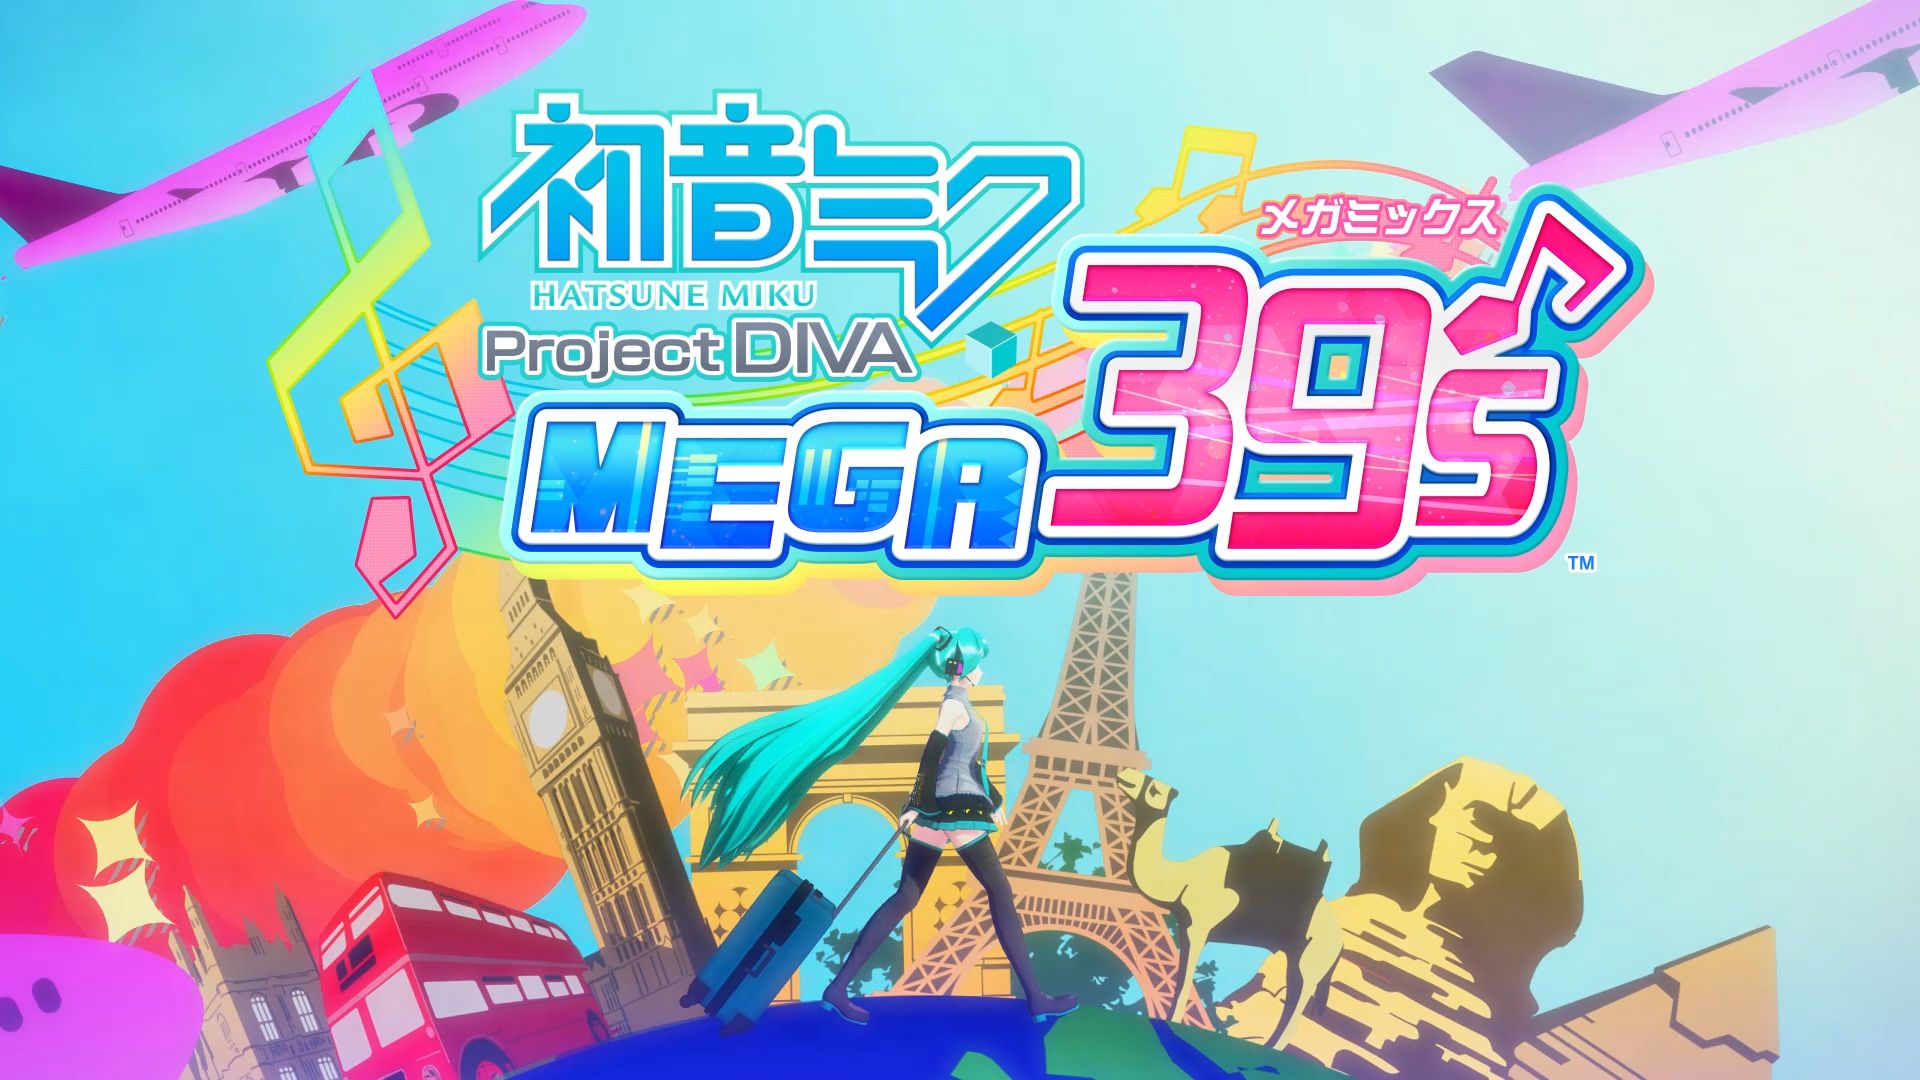 Hatsune Miku: Project DIVA Mega Mix at three songs, game's